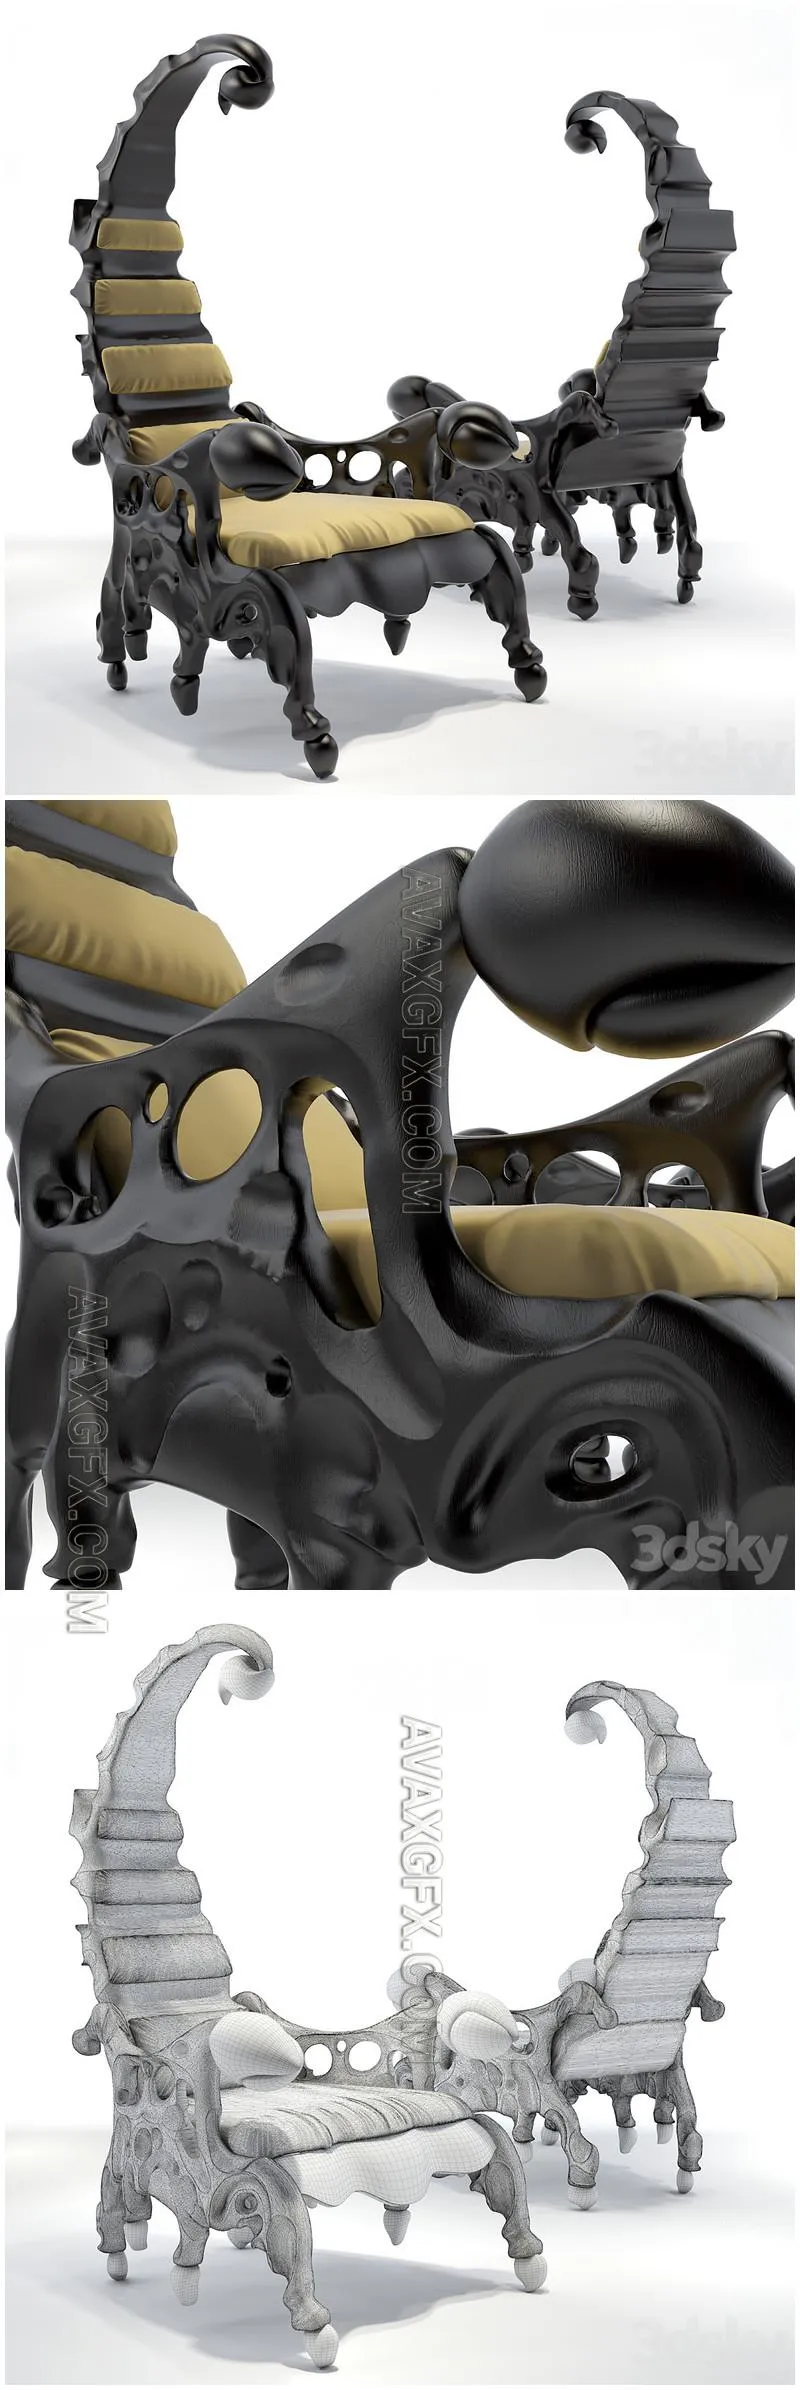 Scorpion chair - 3D Model